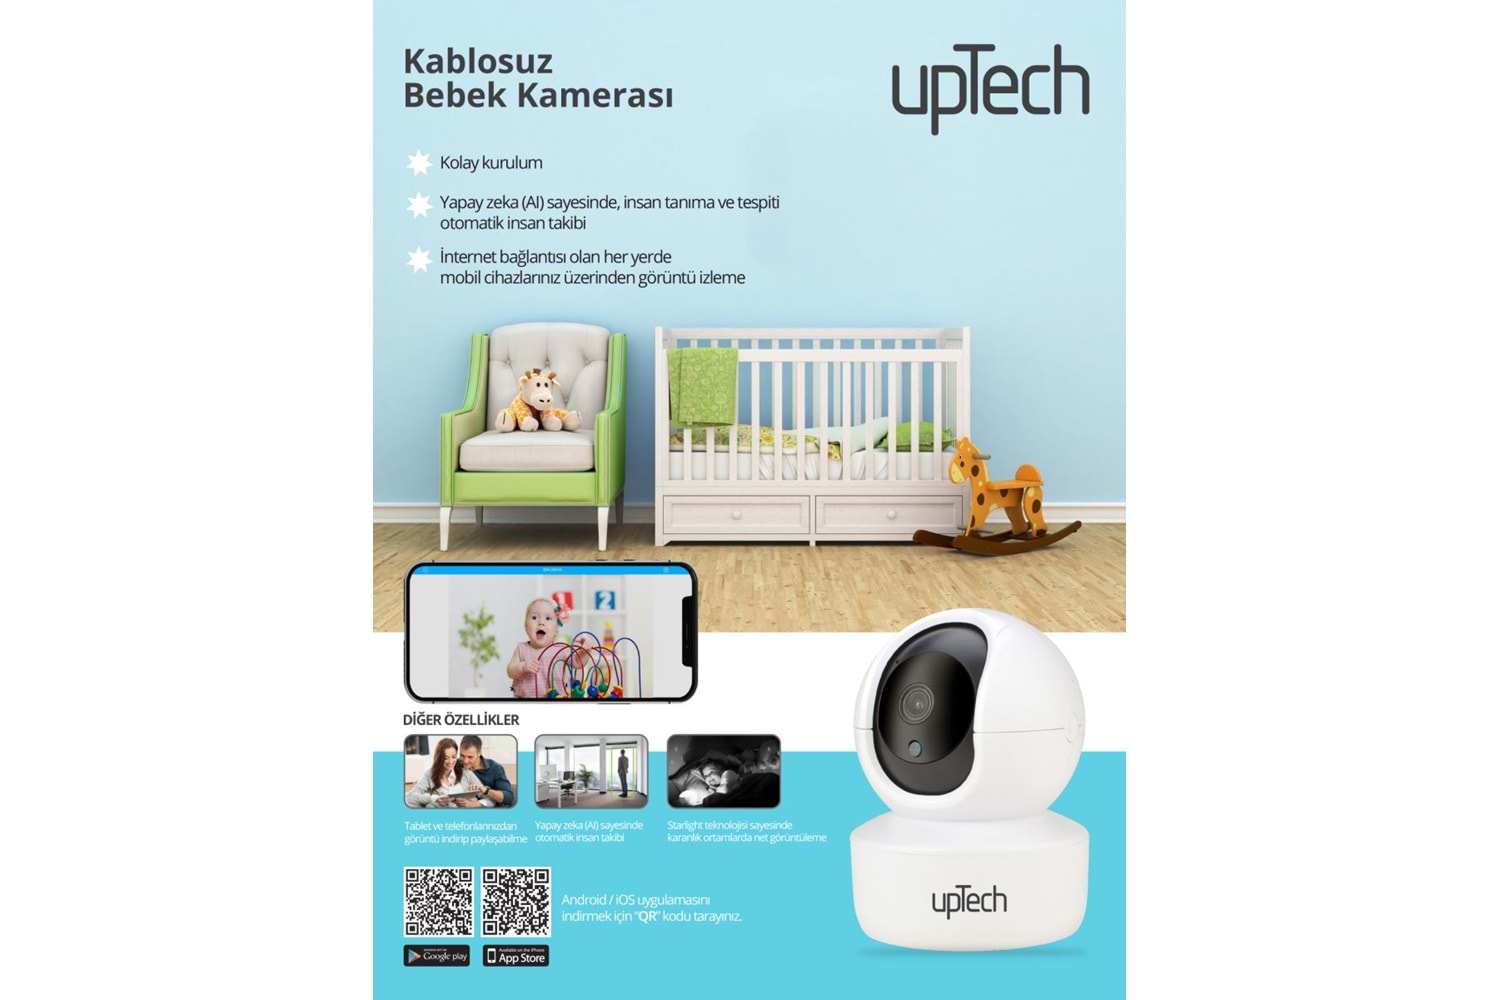 UPTECH IPC-7210 Kablosuz Bebek Kamerası